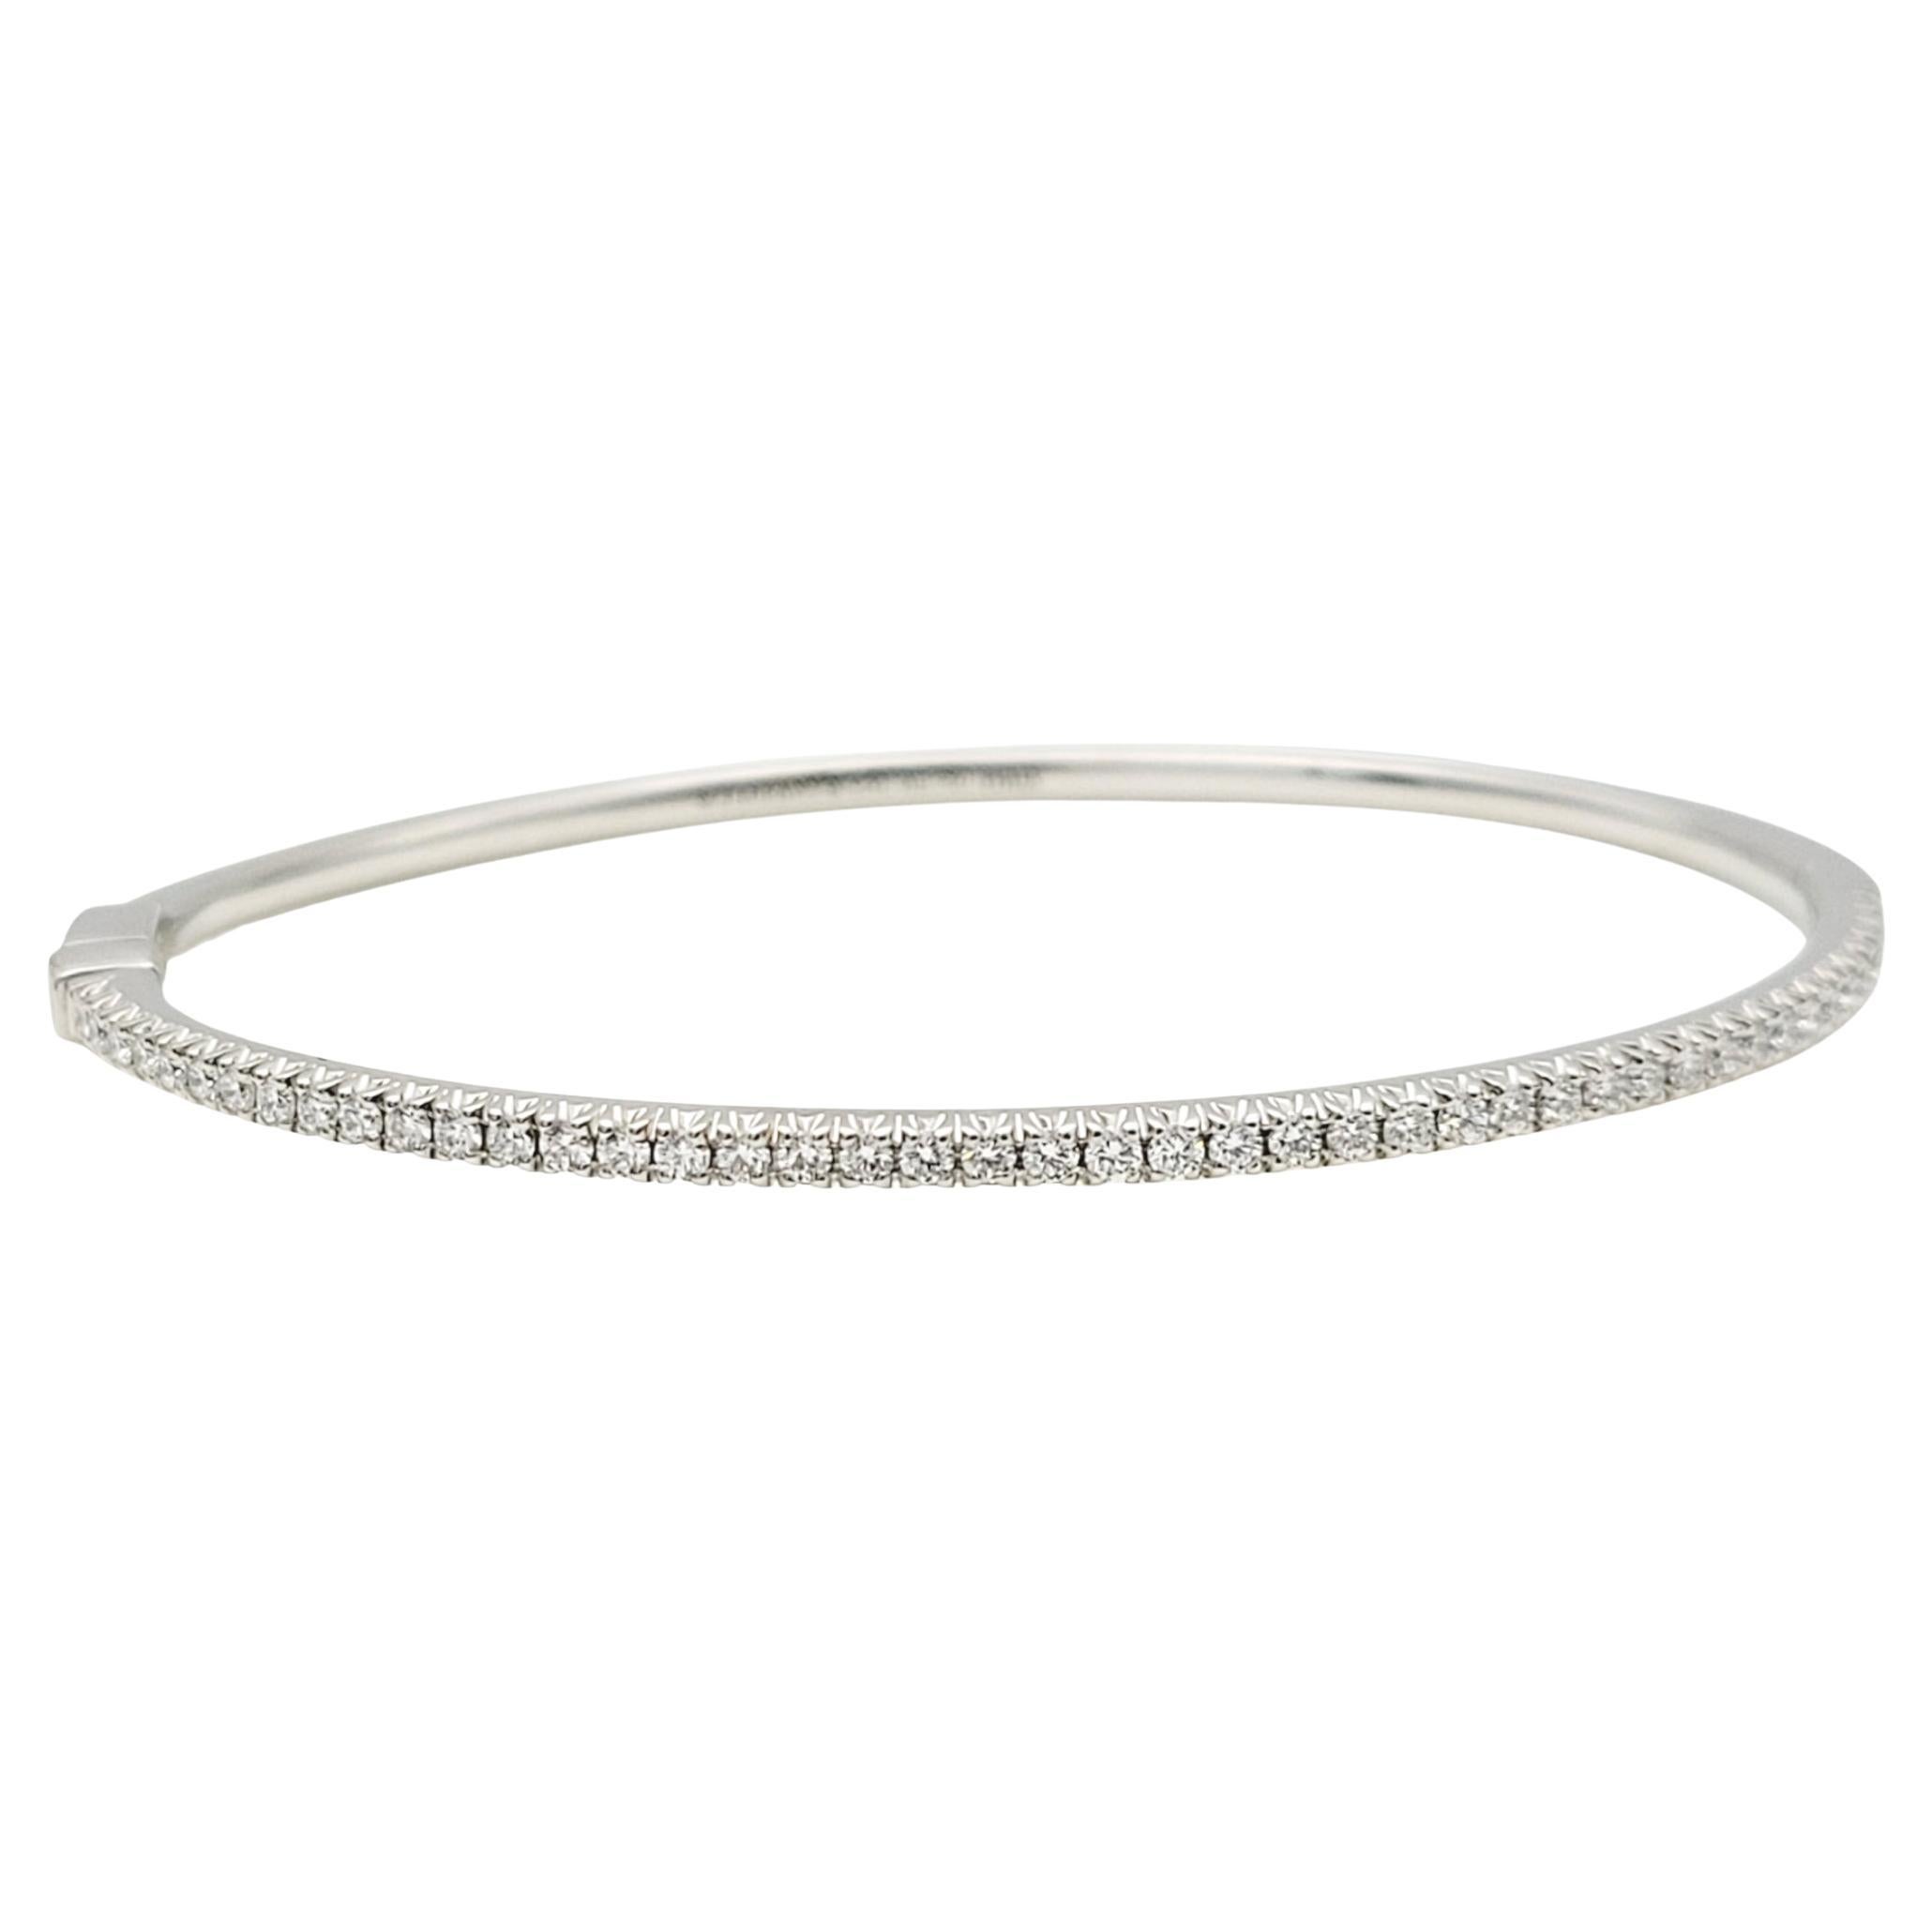 Tiffany & Co. Metro Hinged Bangle Bracelet in 18 Karat White Gold Size Medium